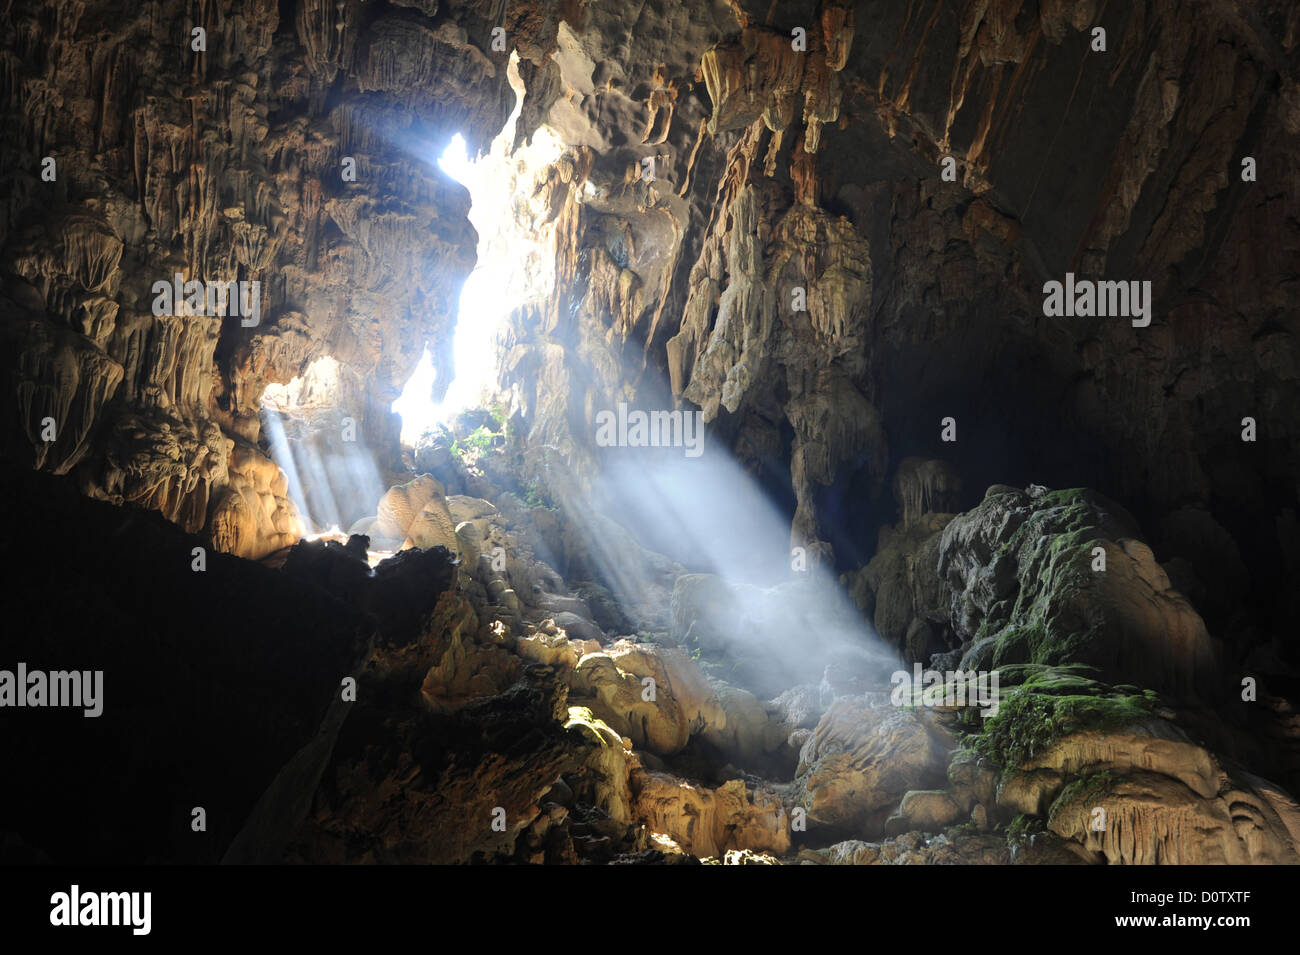 Laos, Asia, grotto, cave, Pukham, Vang Vieng, light, stalactites, Stalagmites Stock Photo